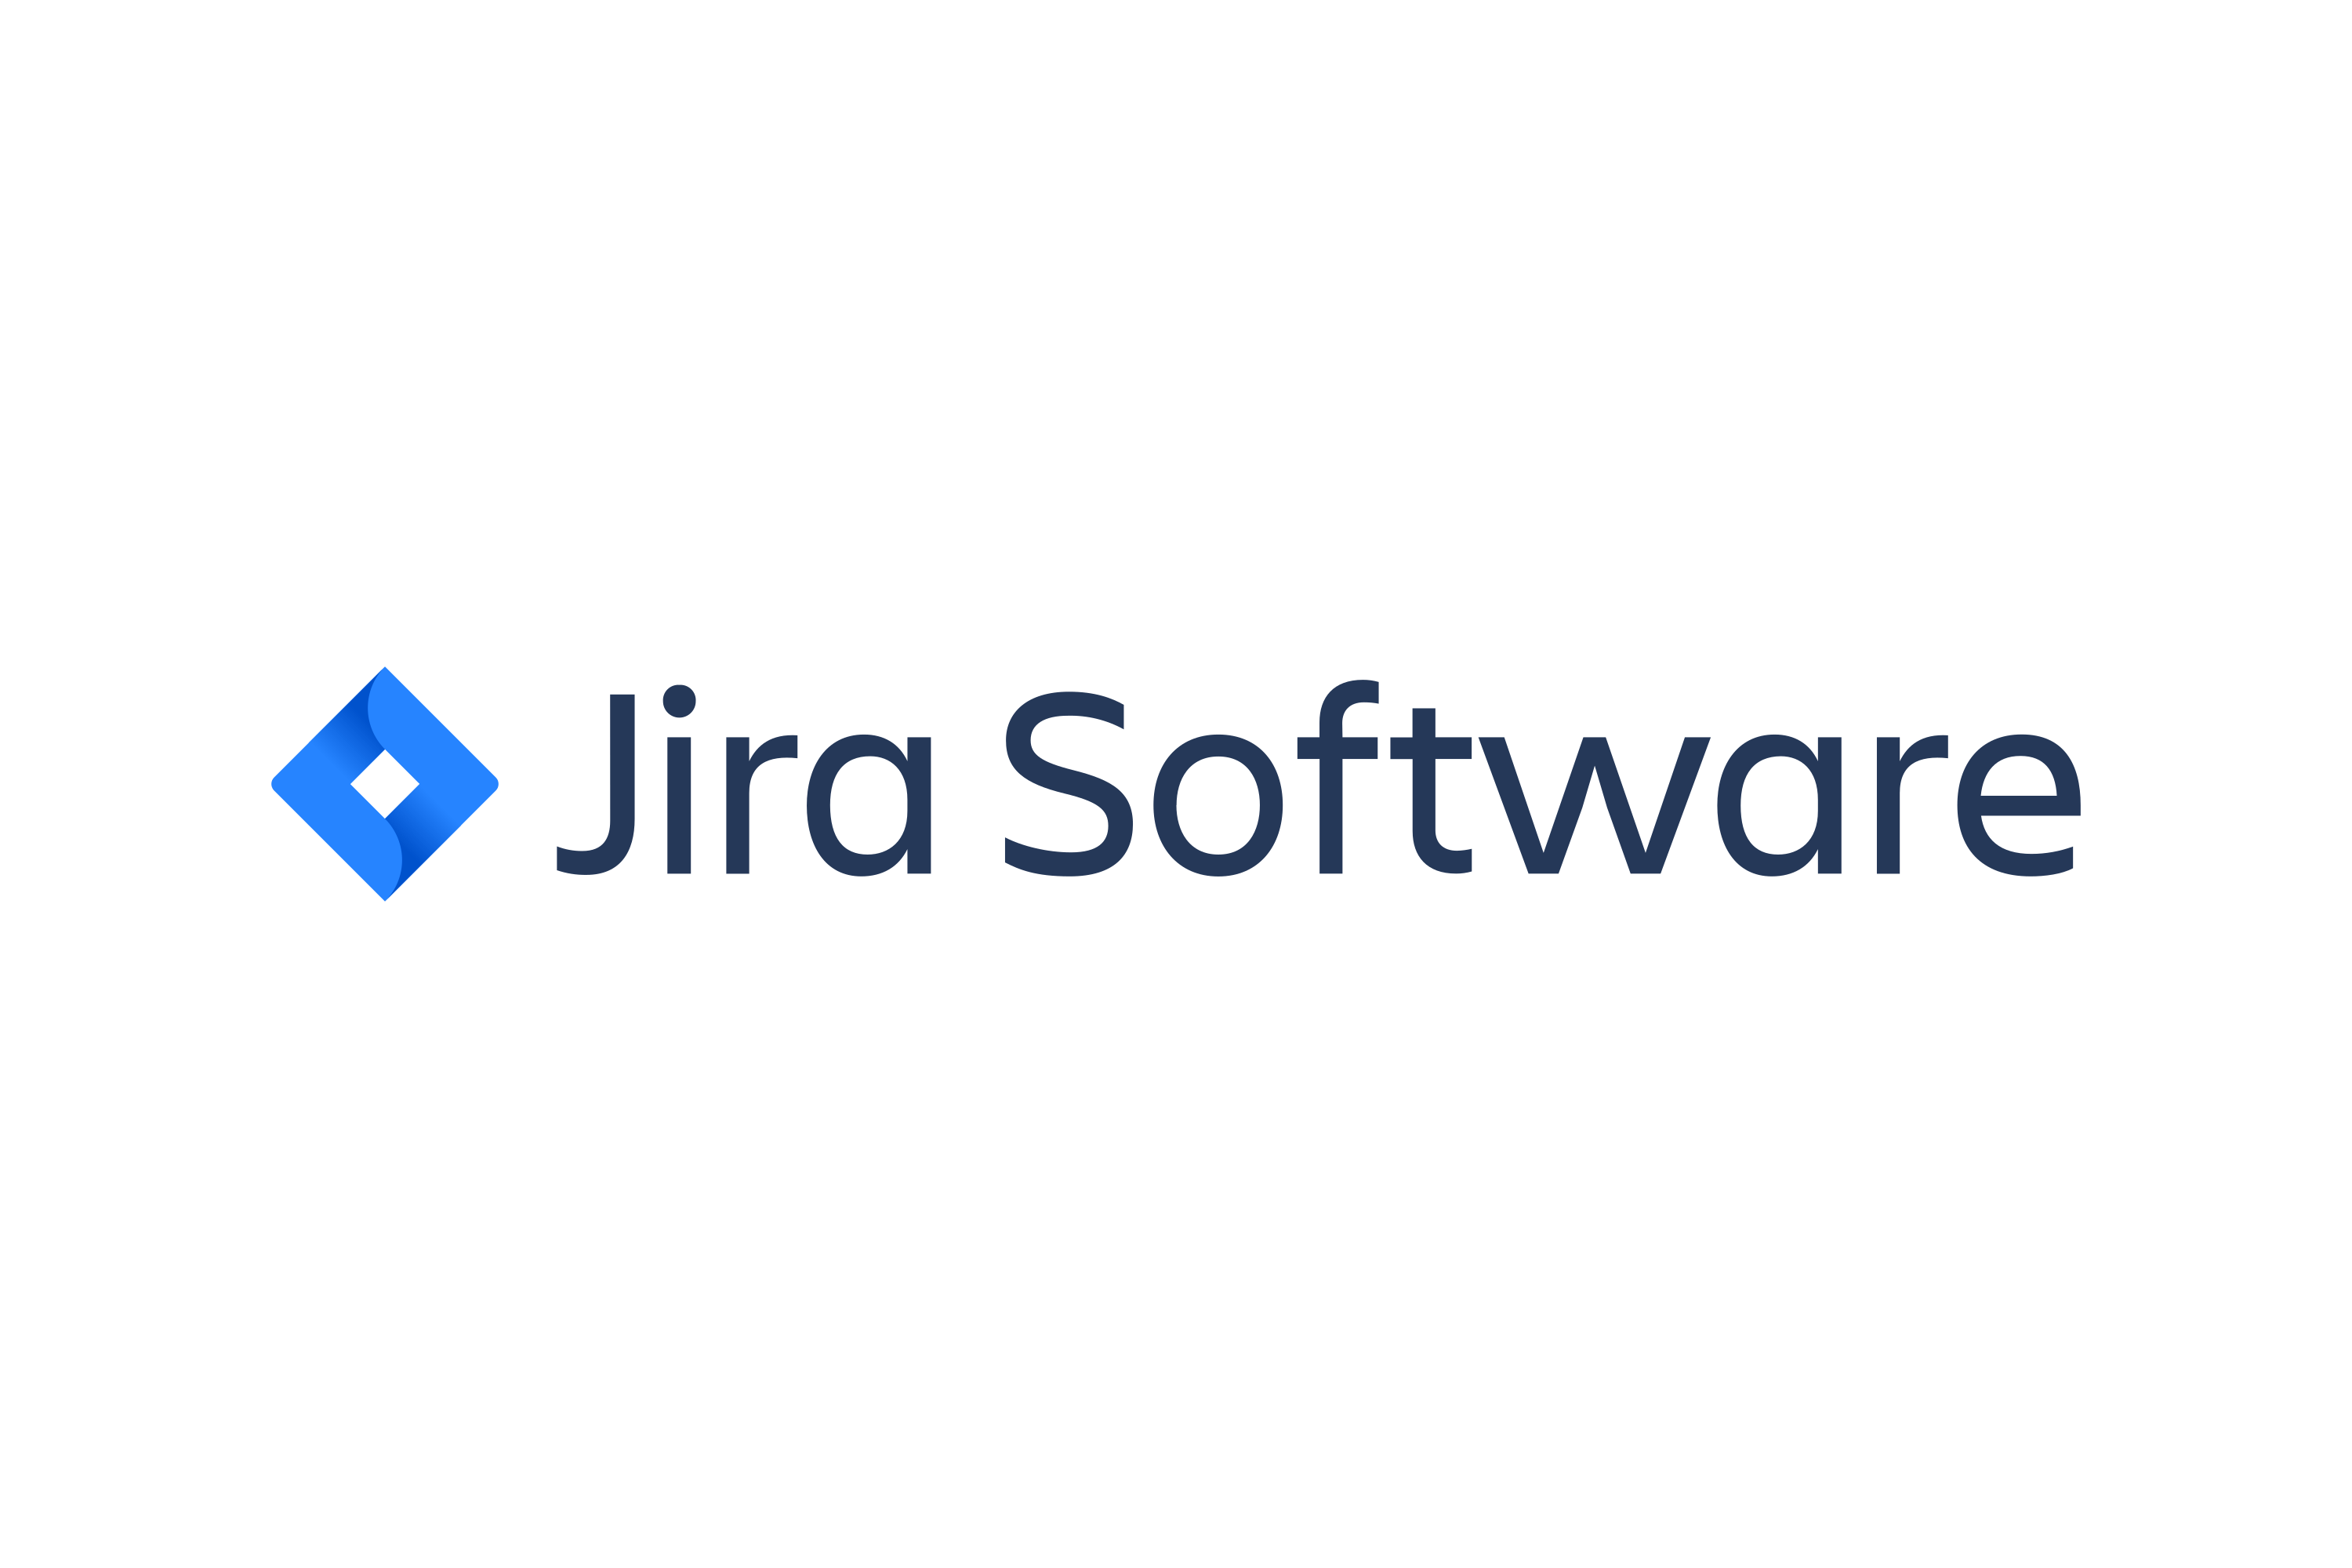 Jira task management software